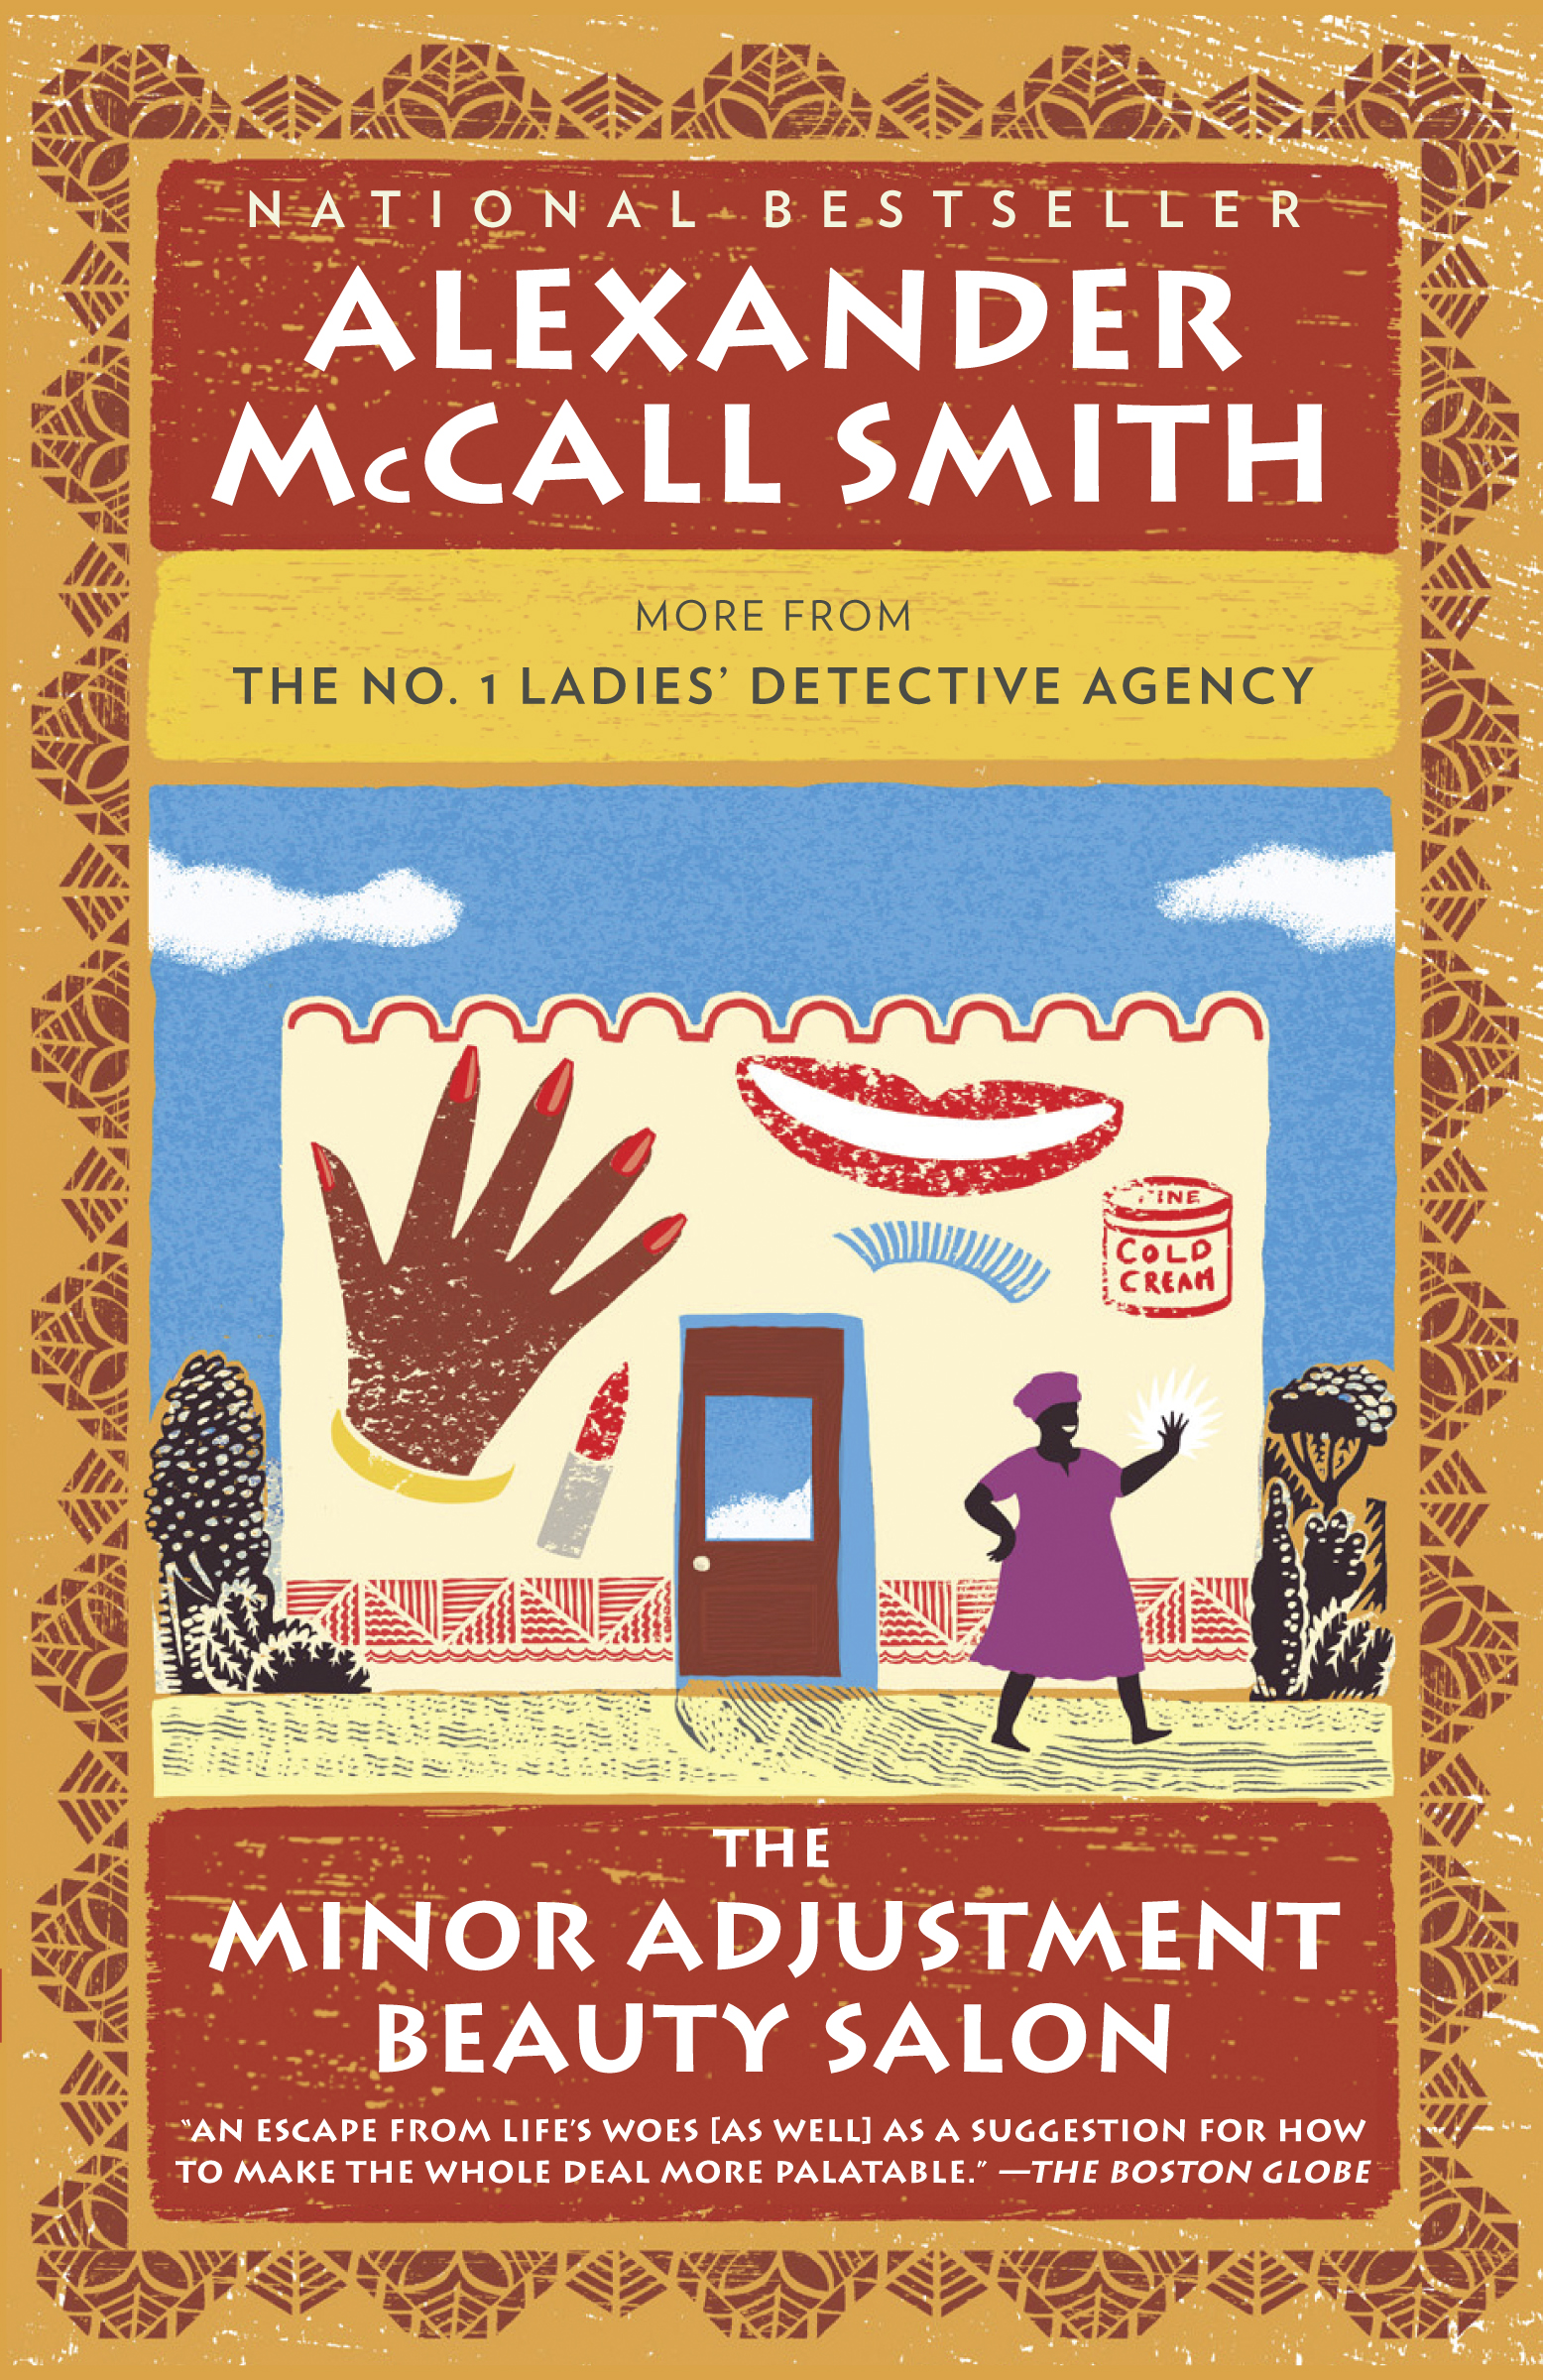 the no 1 ladies detective agency books